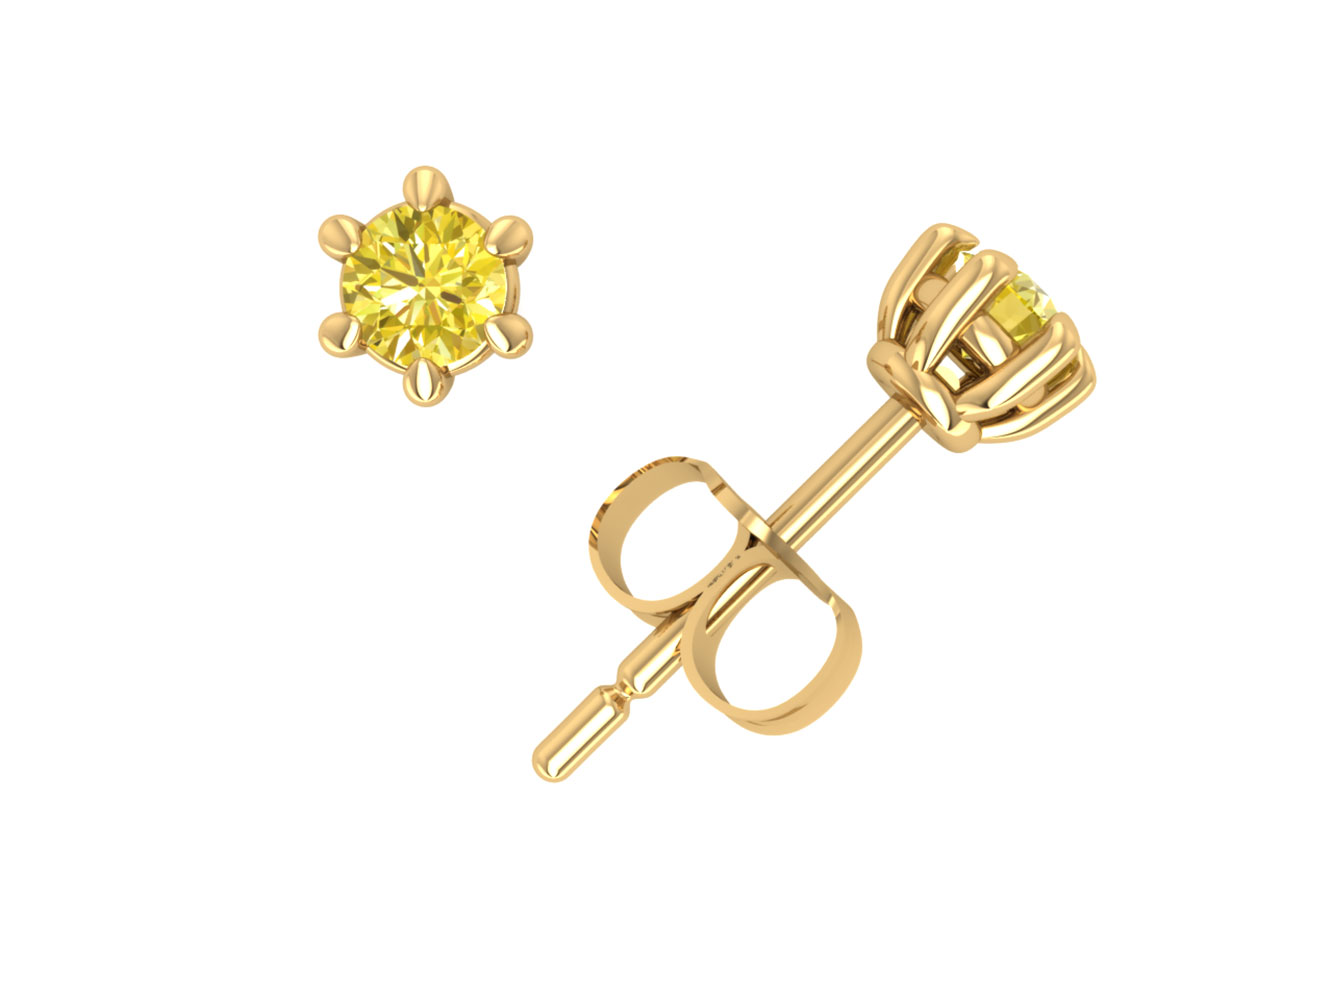 Jewel We Sell 0.20Ct Round Cut Yellow Diamond Basket Stud Earrings 14k White or Yellow Gold Prong Set I1